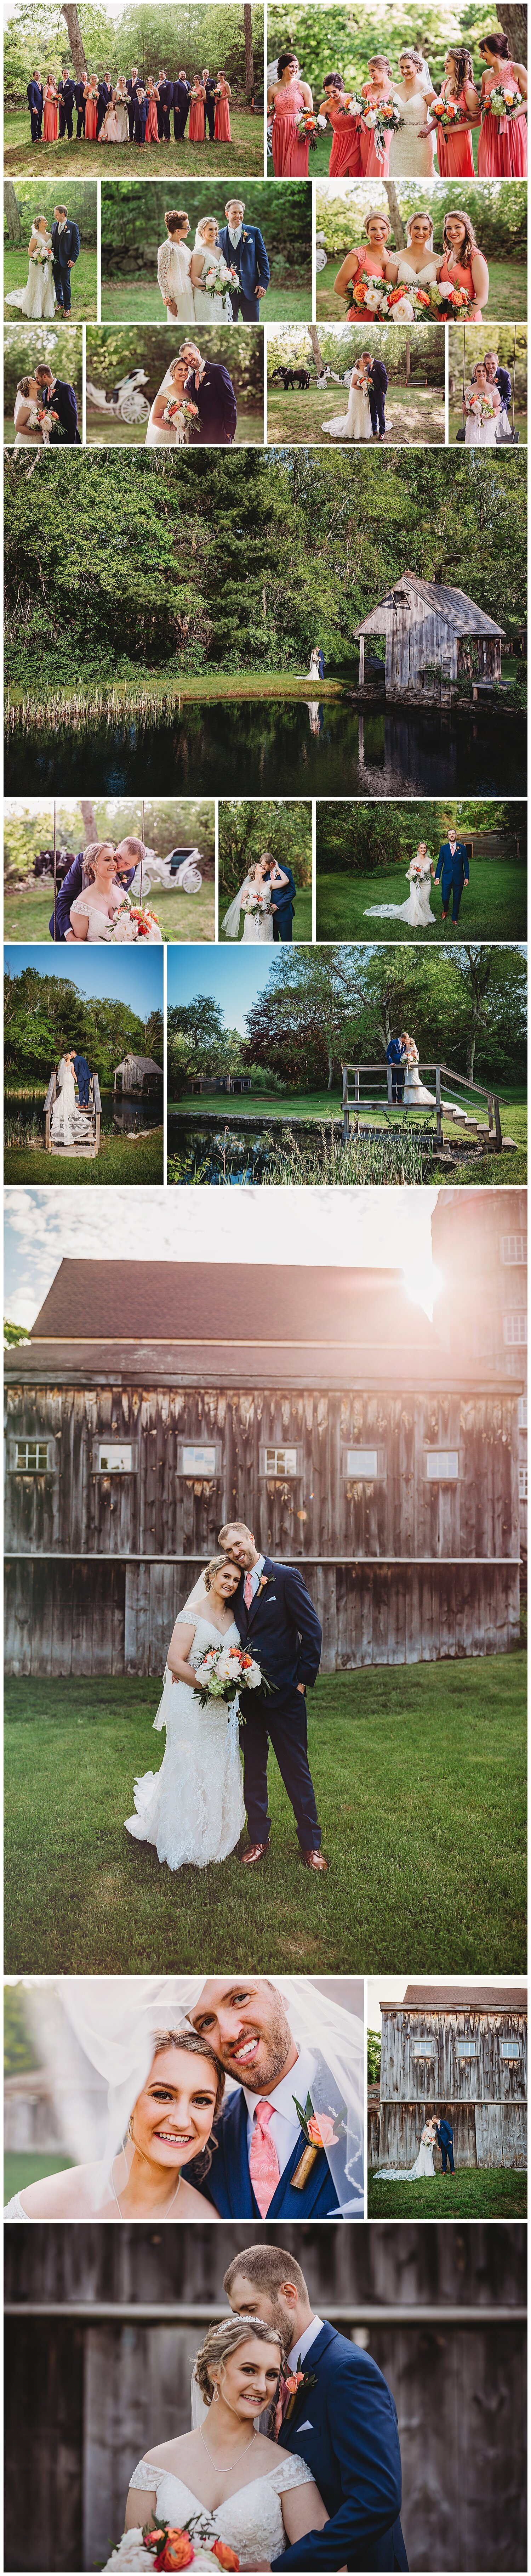 CT-Wedding-Photographer-Wrights-Mill-Farm05.jpg